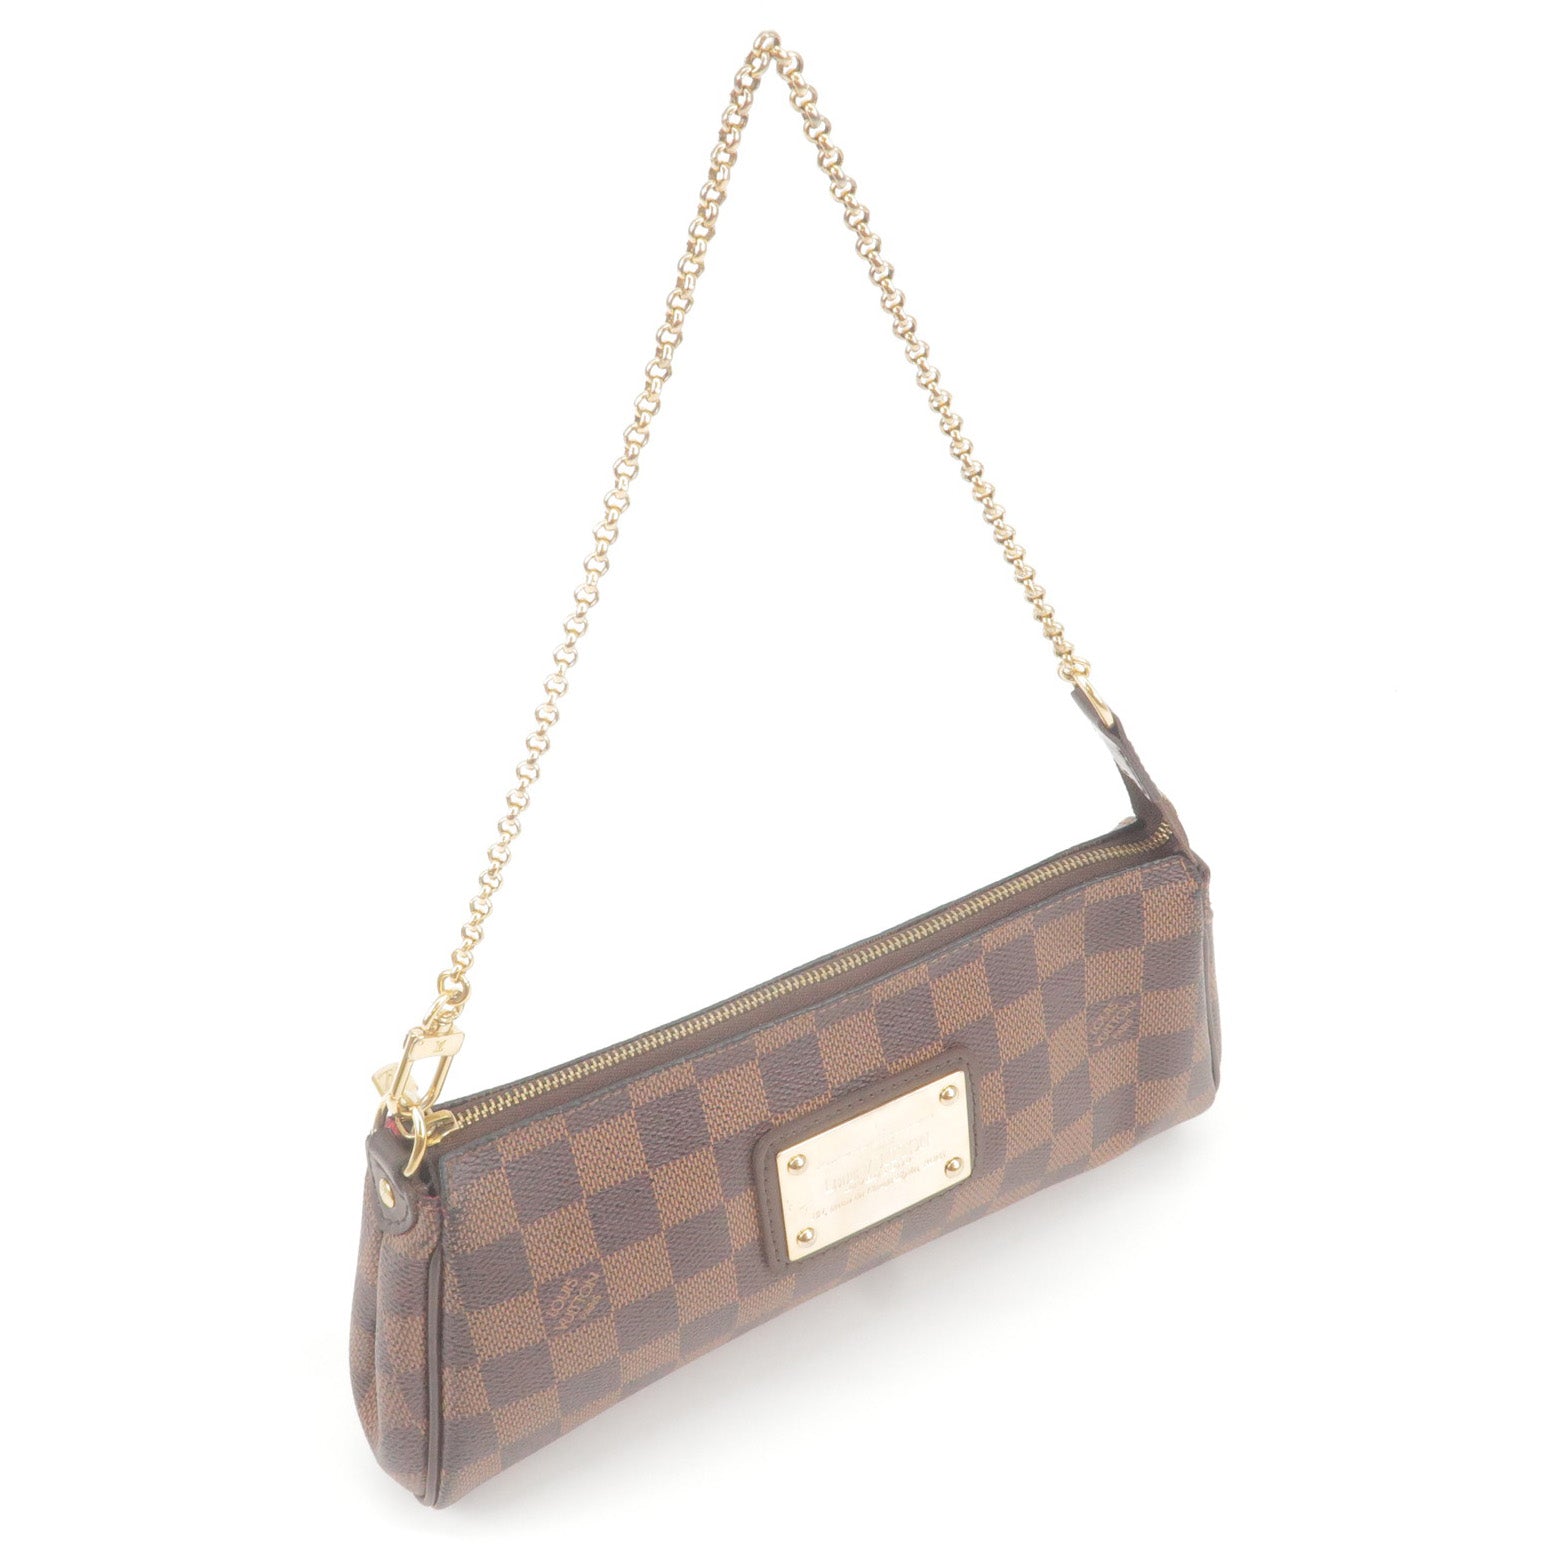 Authentic Louis Vuitton Damier Canvas Eva Clutch Handbag Article: N55213  Made in France, Accessorising - Brand Name / Designer Handbags For Carry &  Wear Sha…